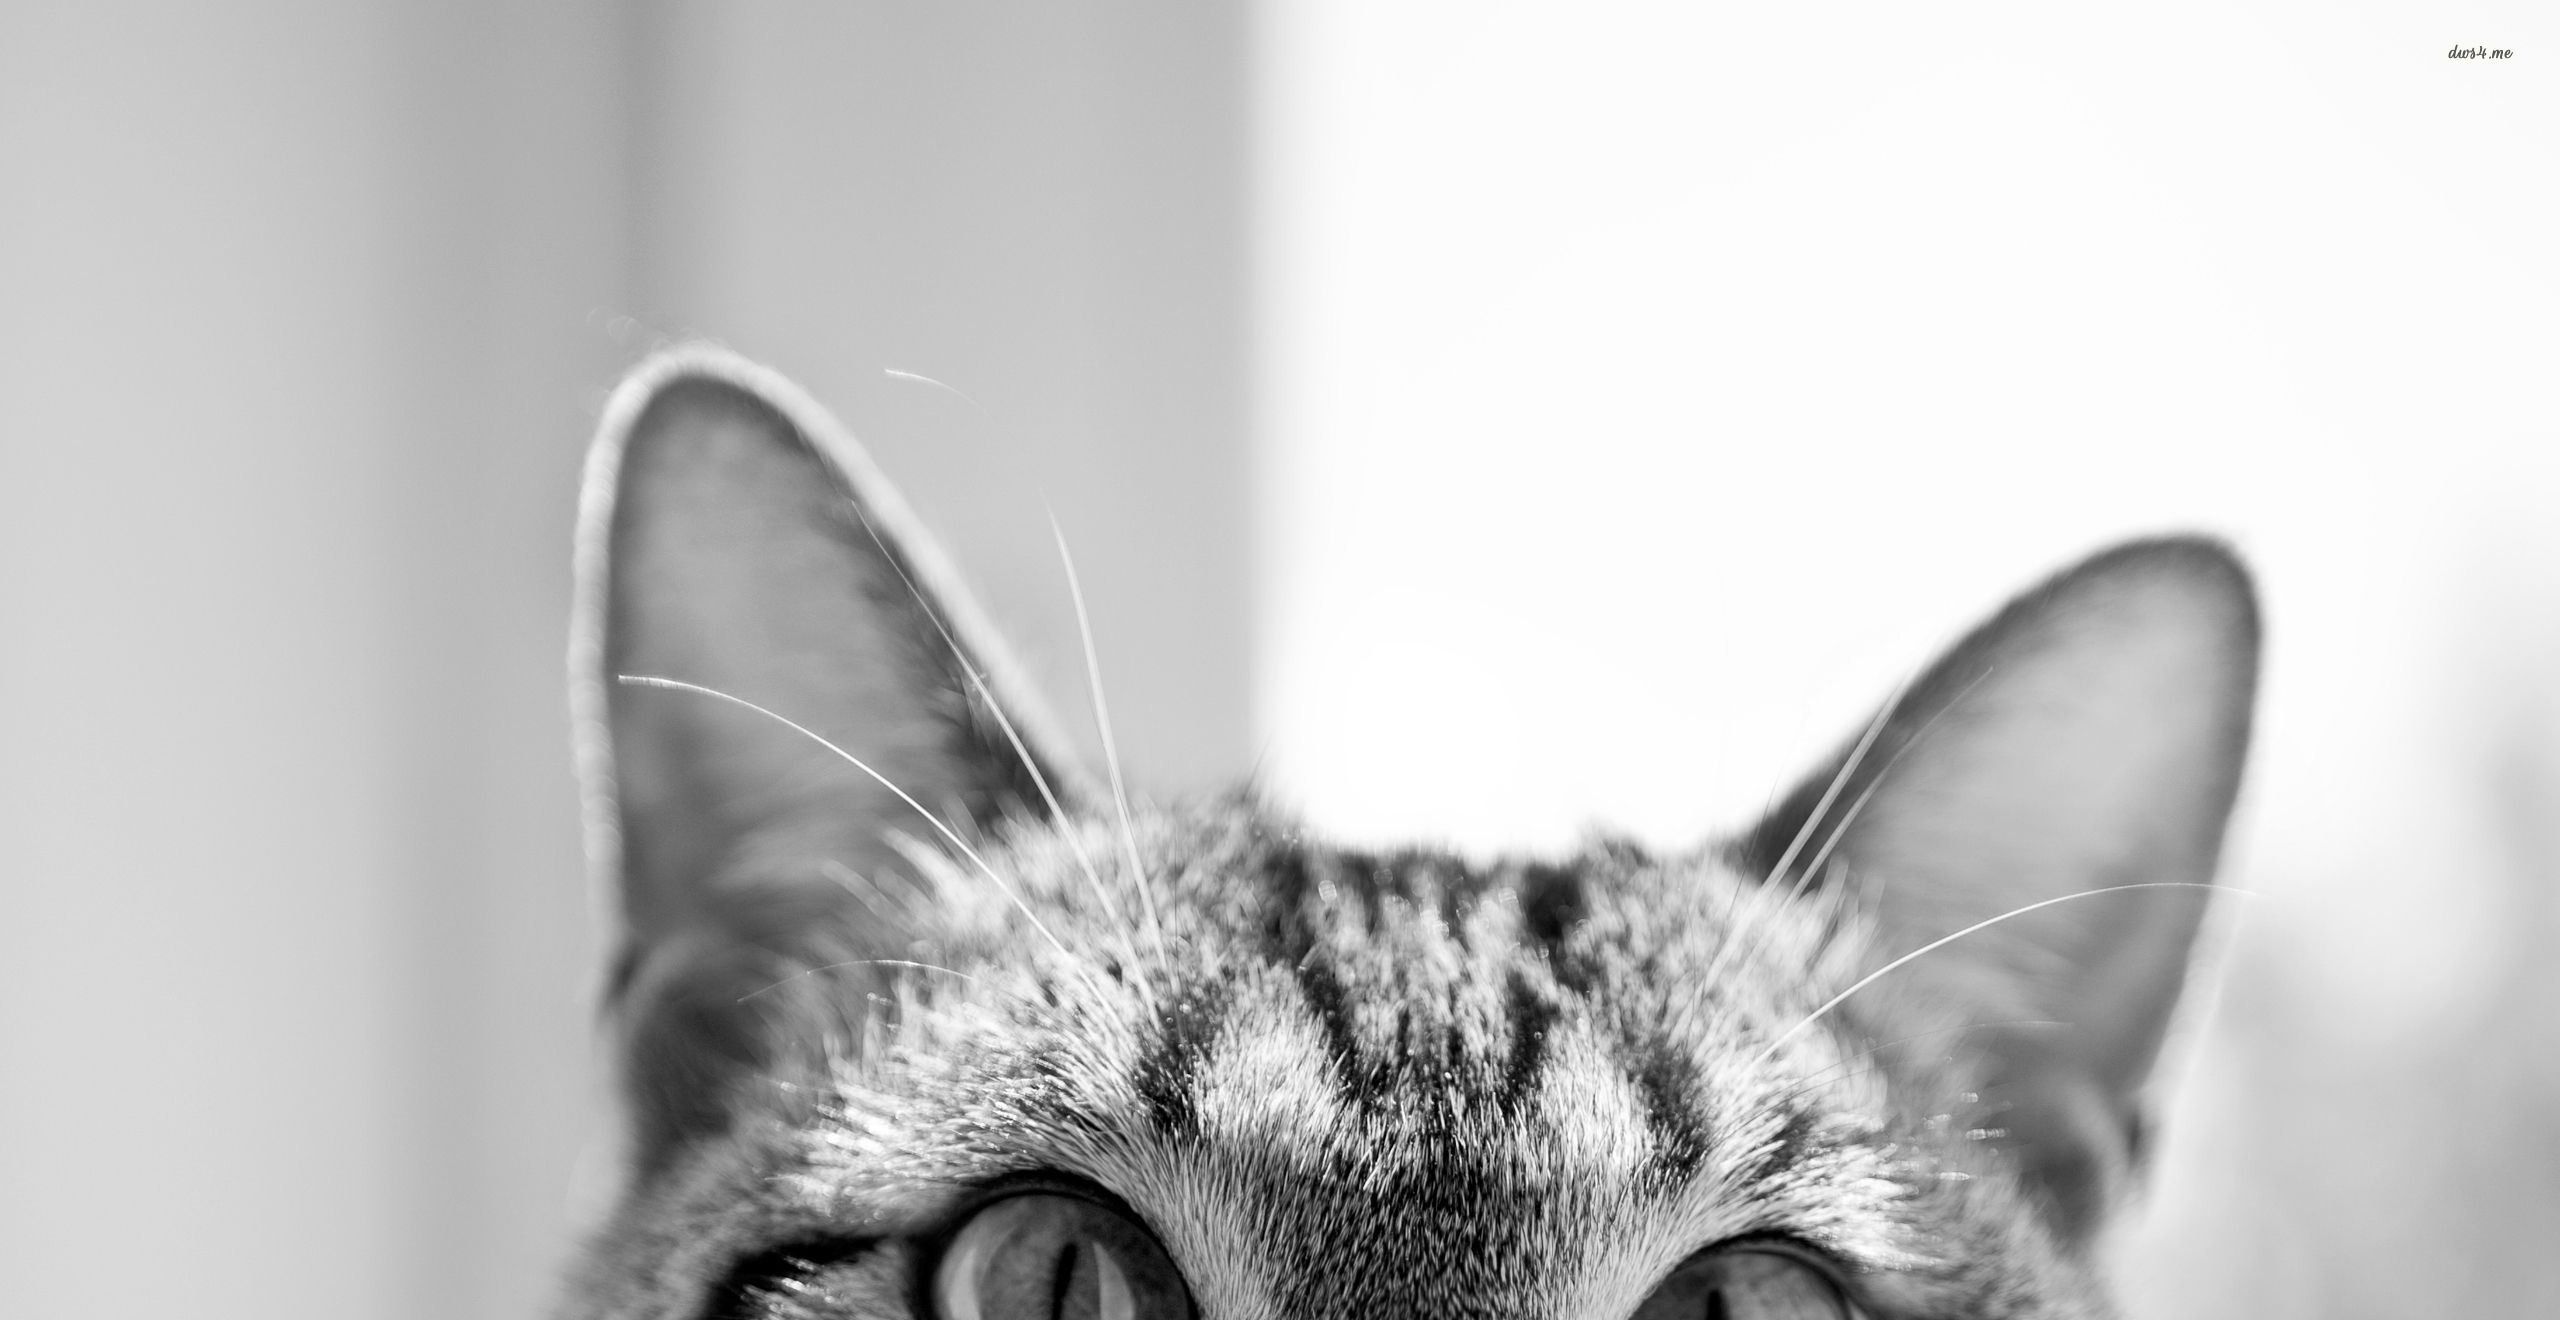 cute cat tumblr backgrounds